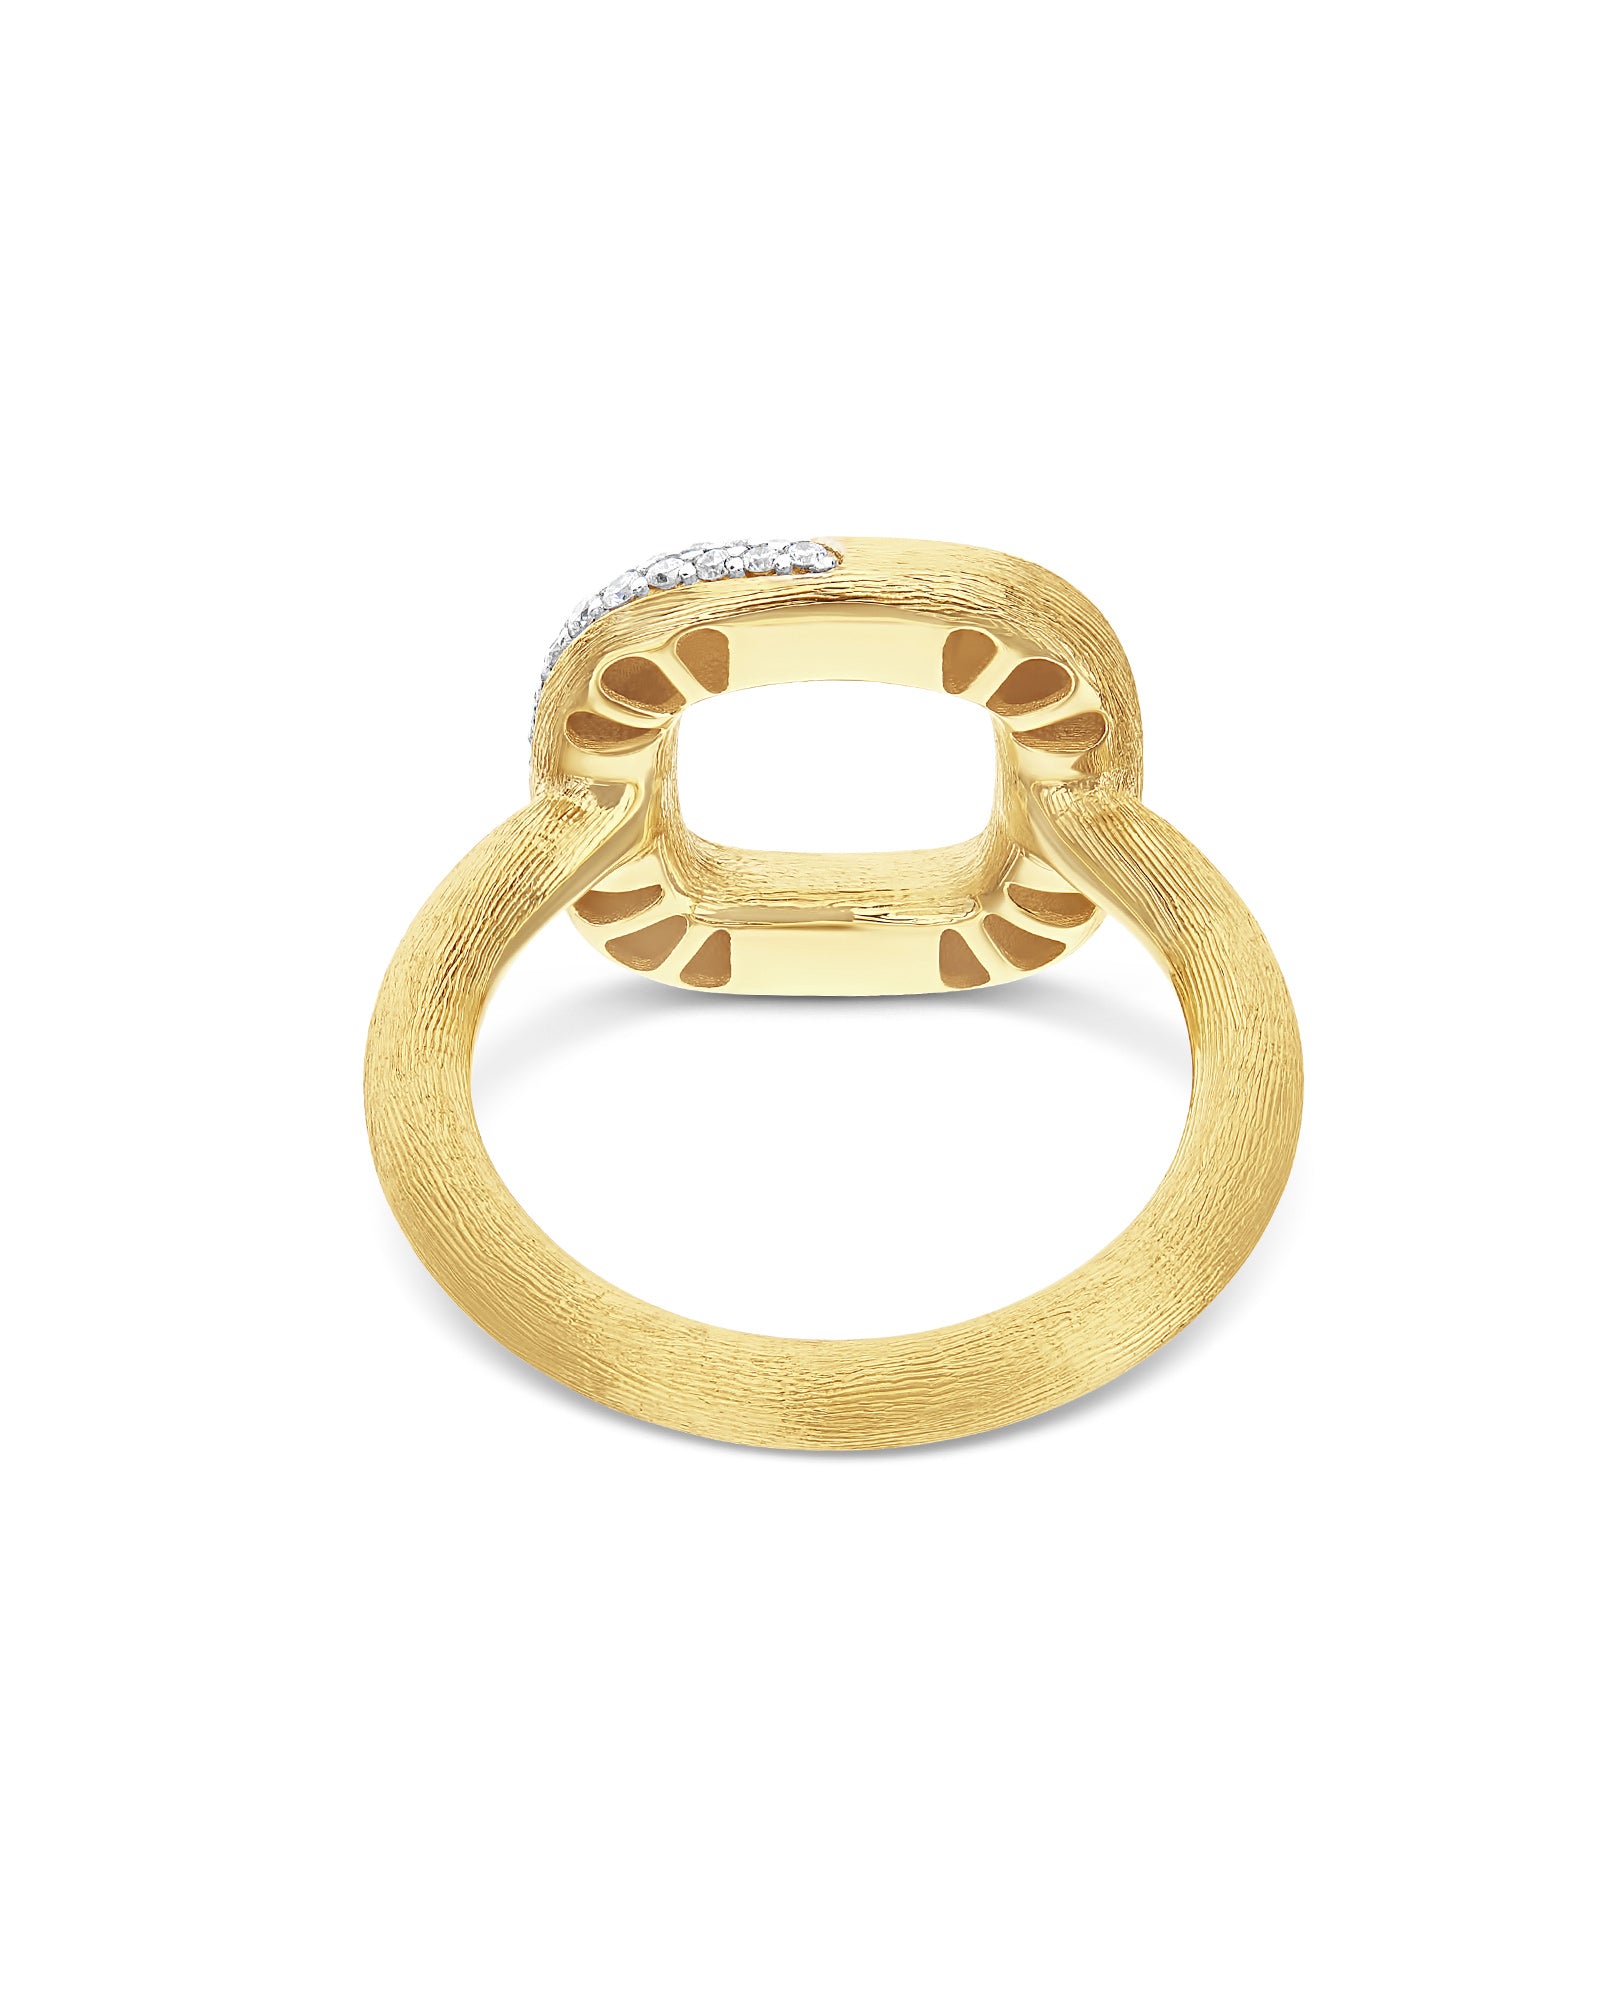 "Libera" small squared gold and diamonds ring